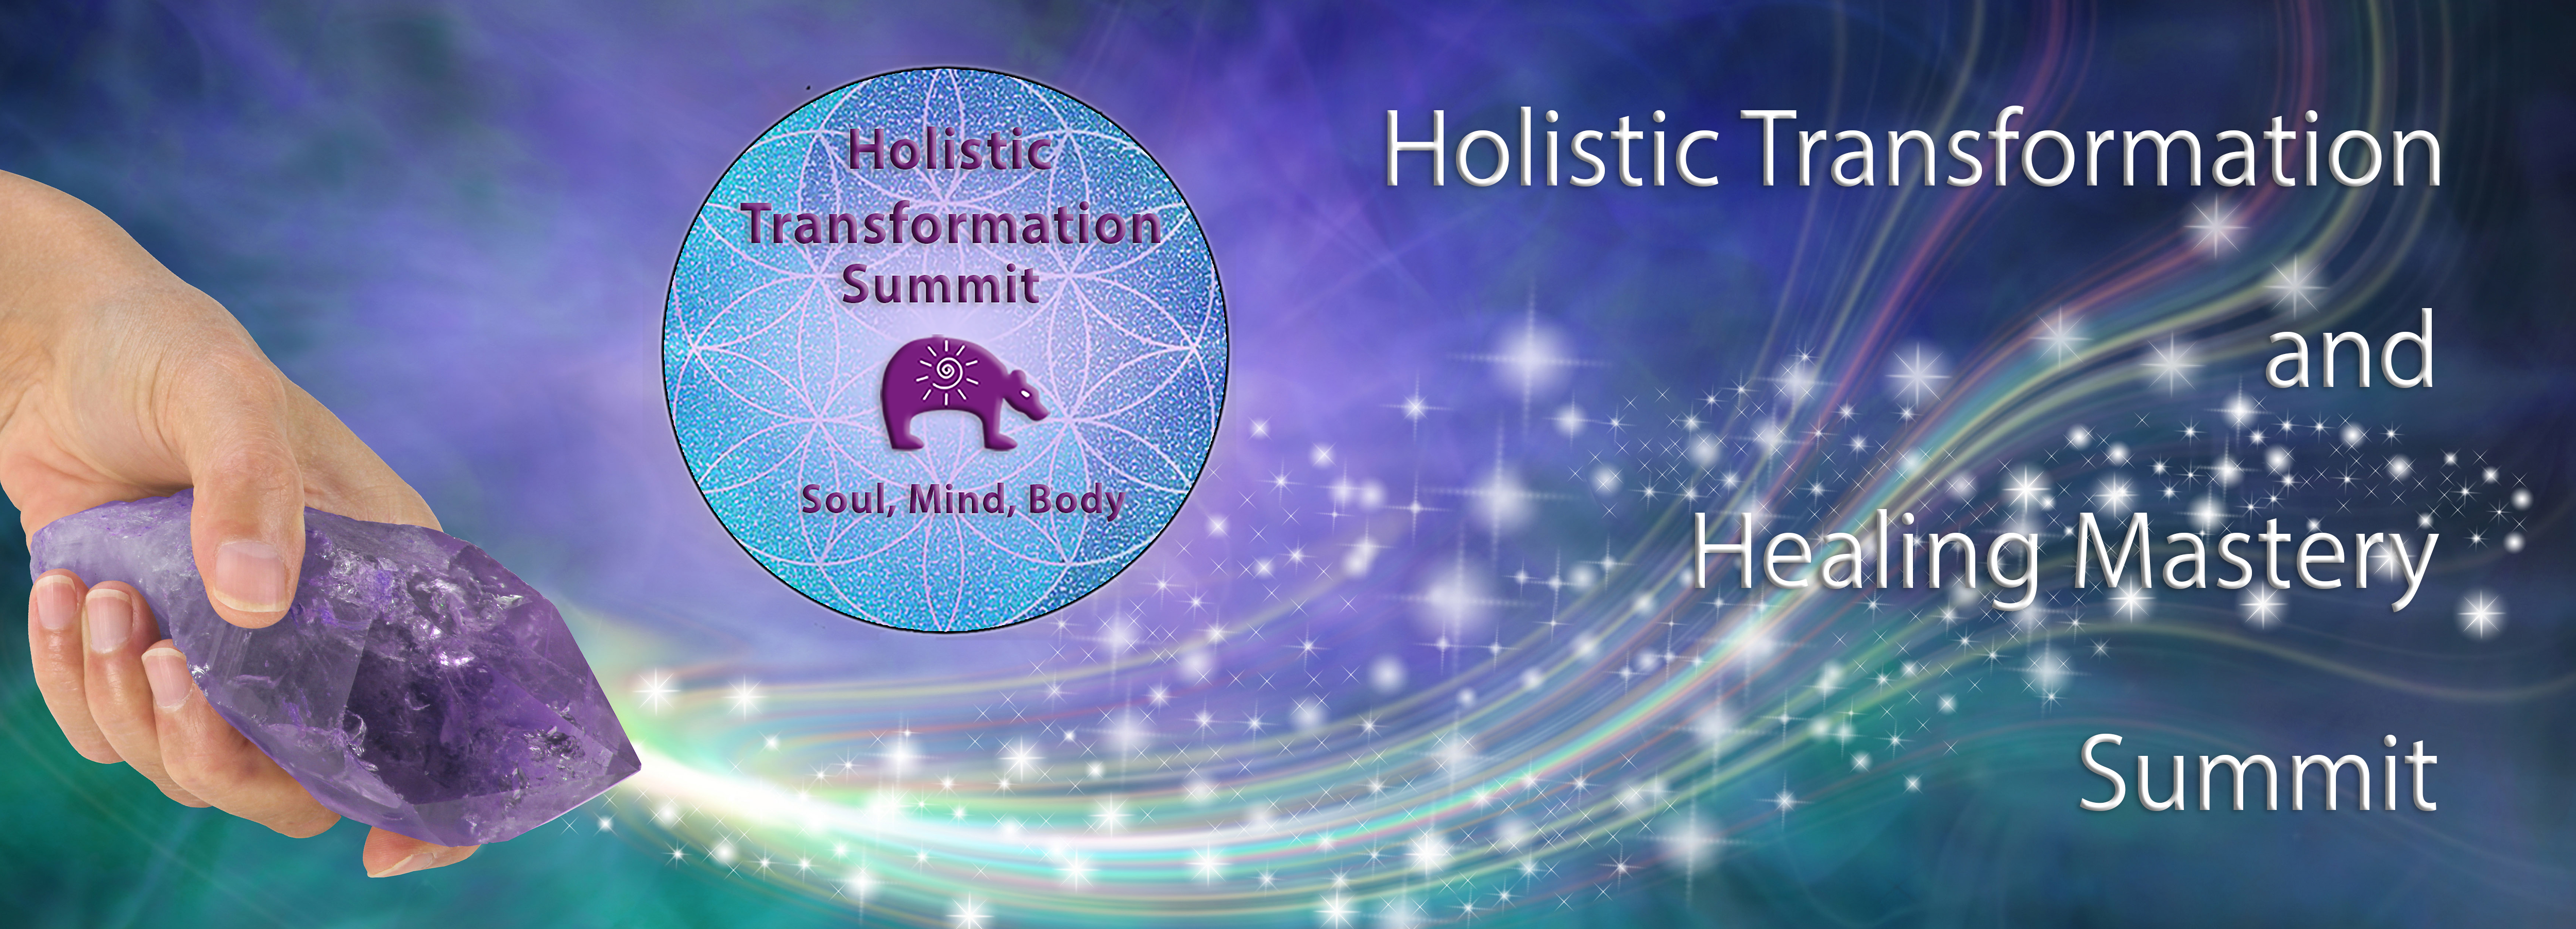 Holistic Transformation & Healing Mastery Summit Header